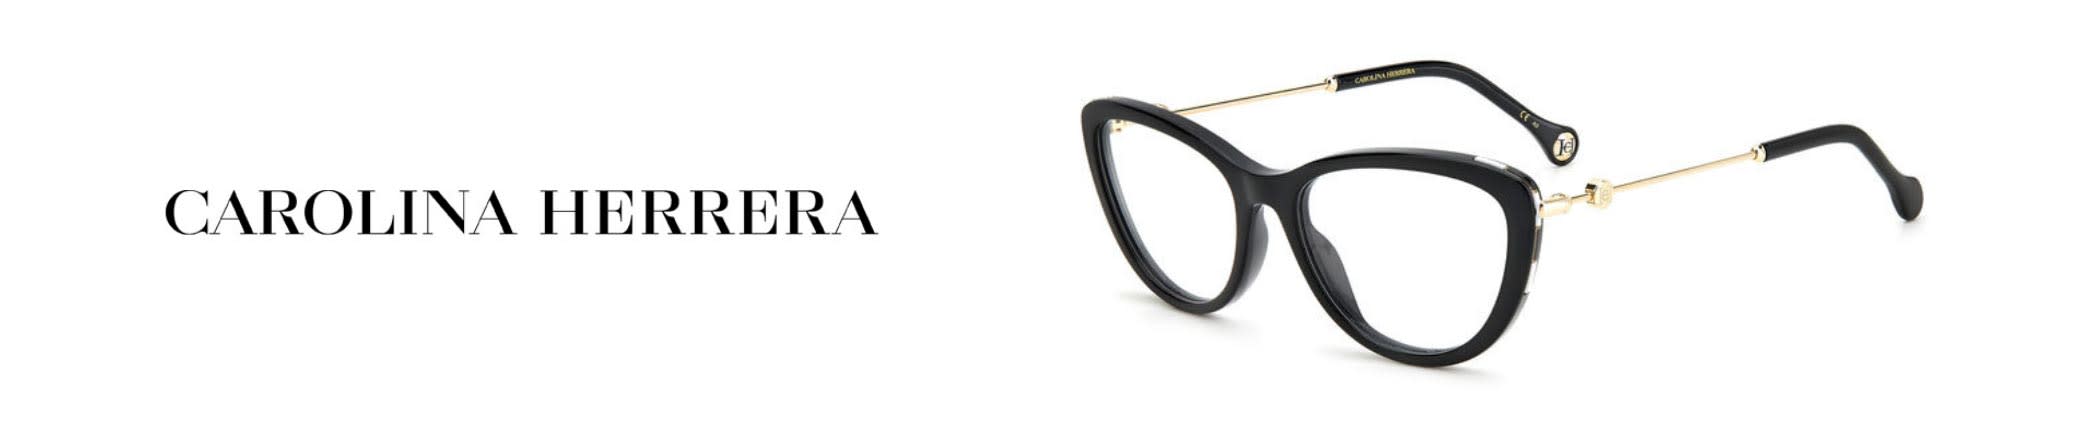 Shop Carolina Herrera Eyeglasses & Sunglasses